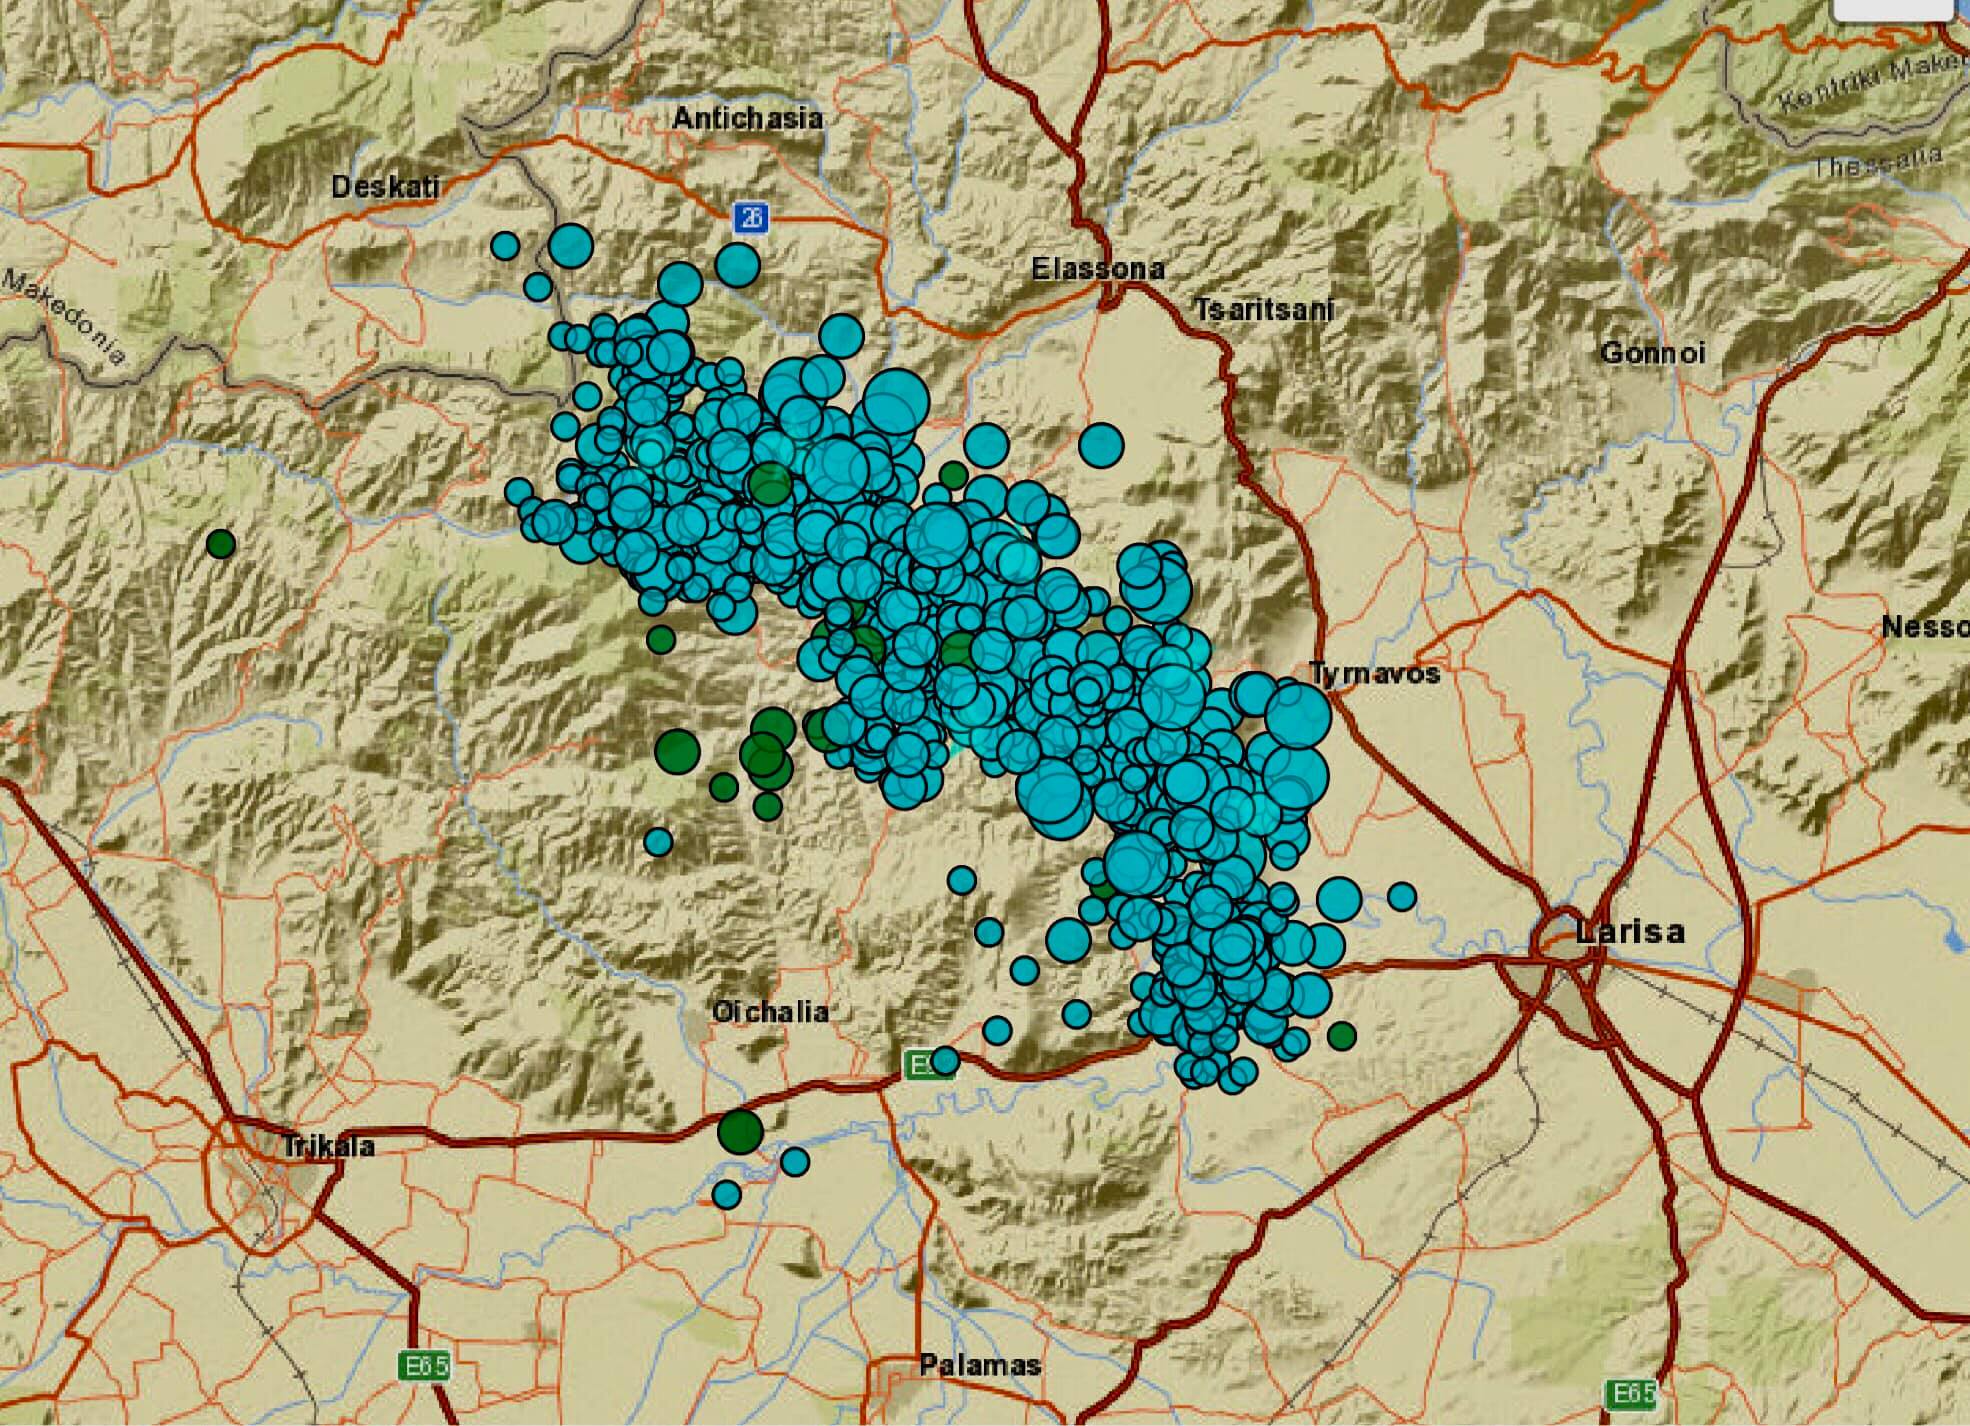 More information about "Σεισμός Ελασσόνας: Πάνω από 1.000 δονήσεις σε 15 μέρες"